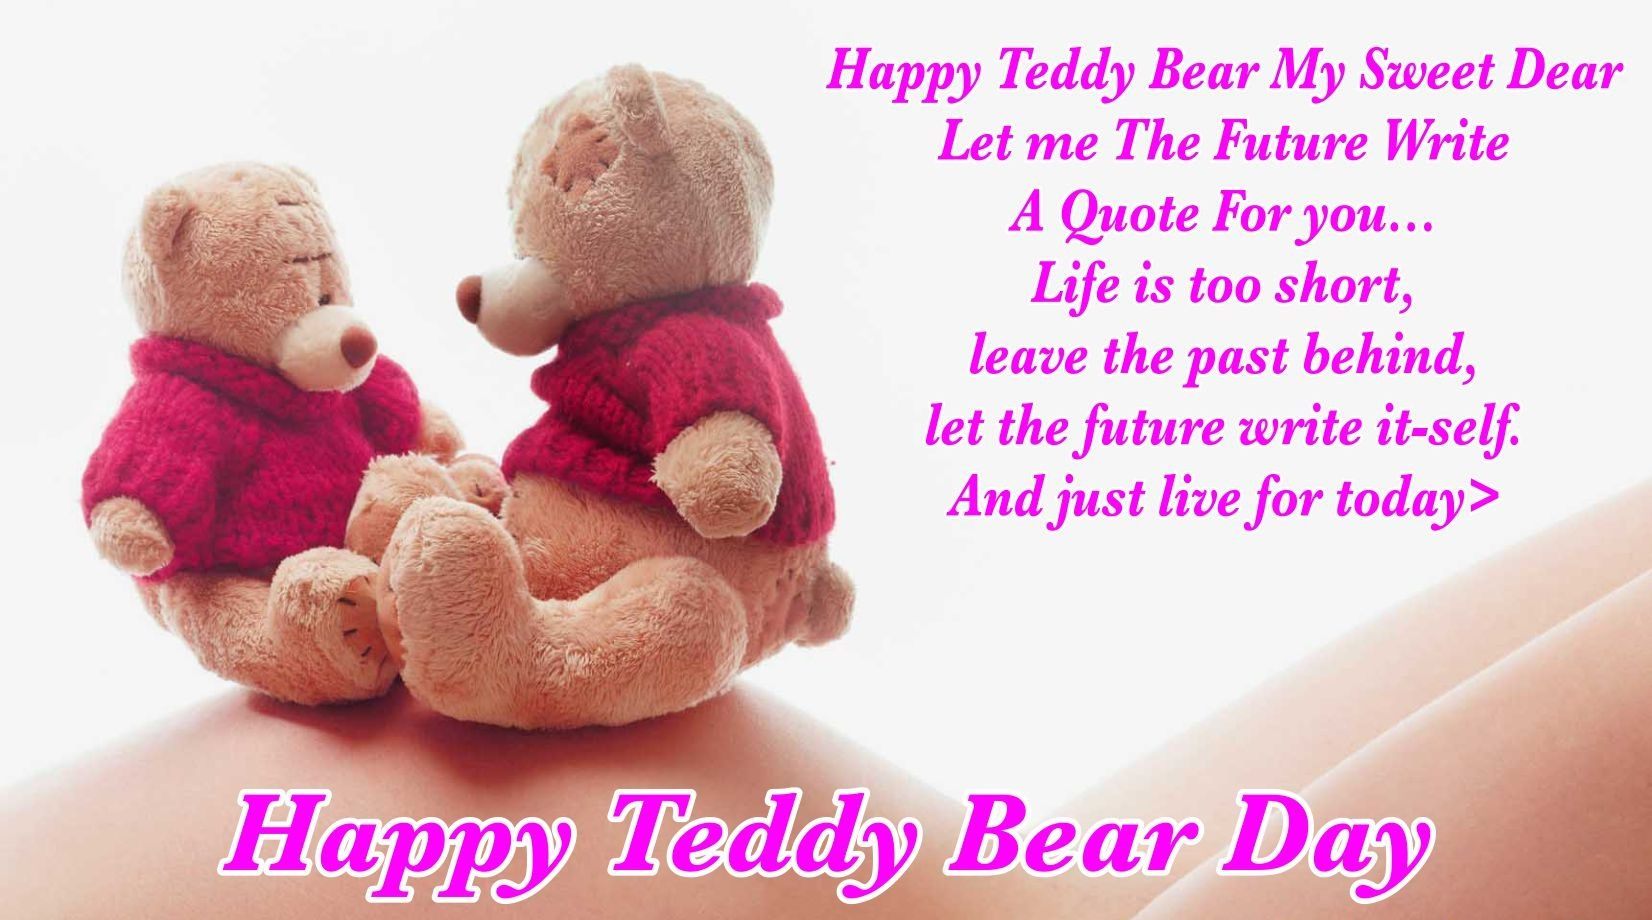 Happy Teddy-Day